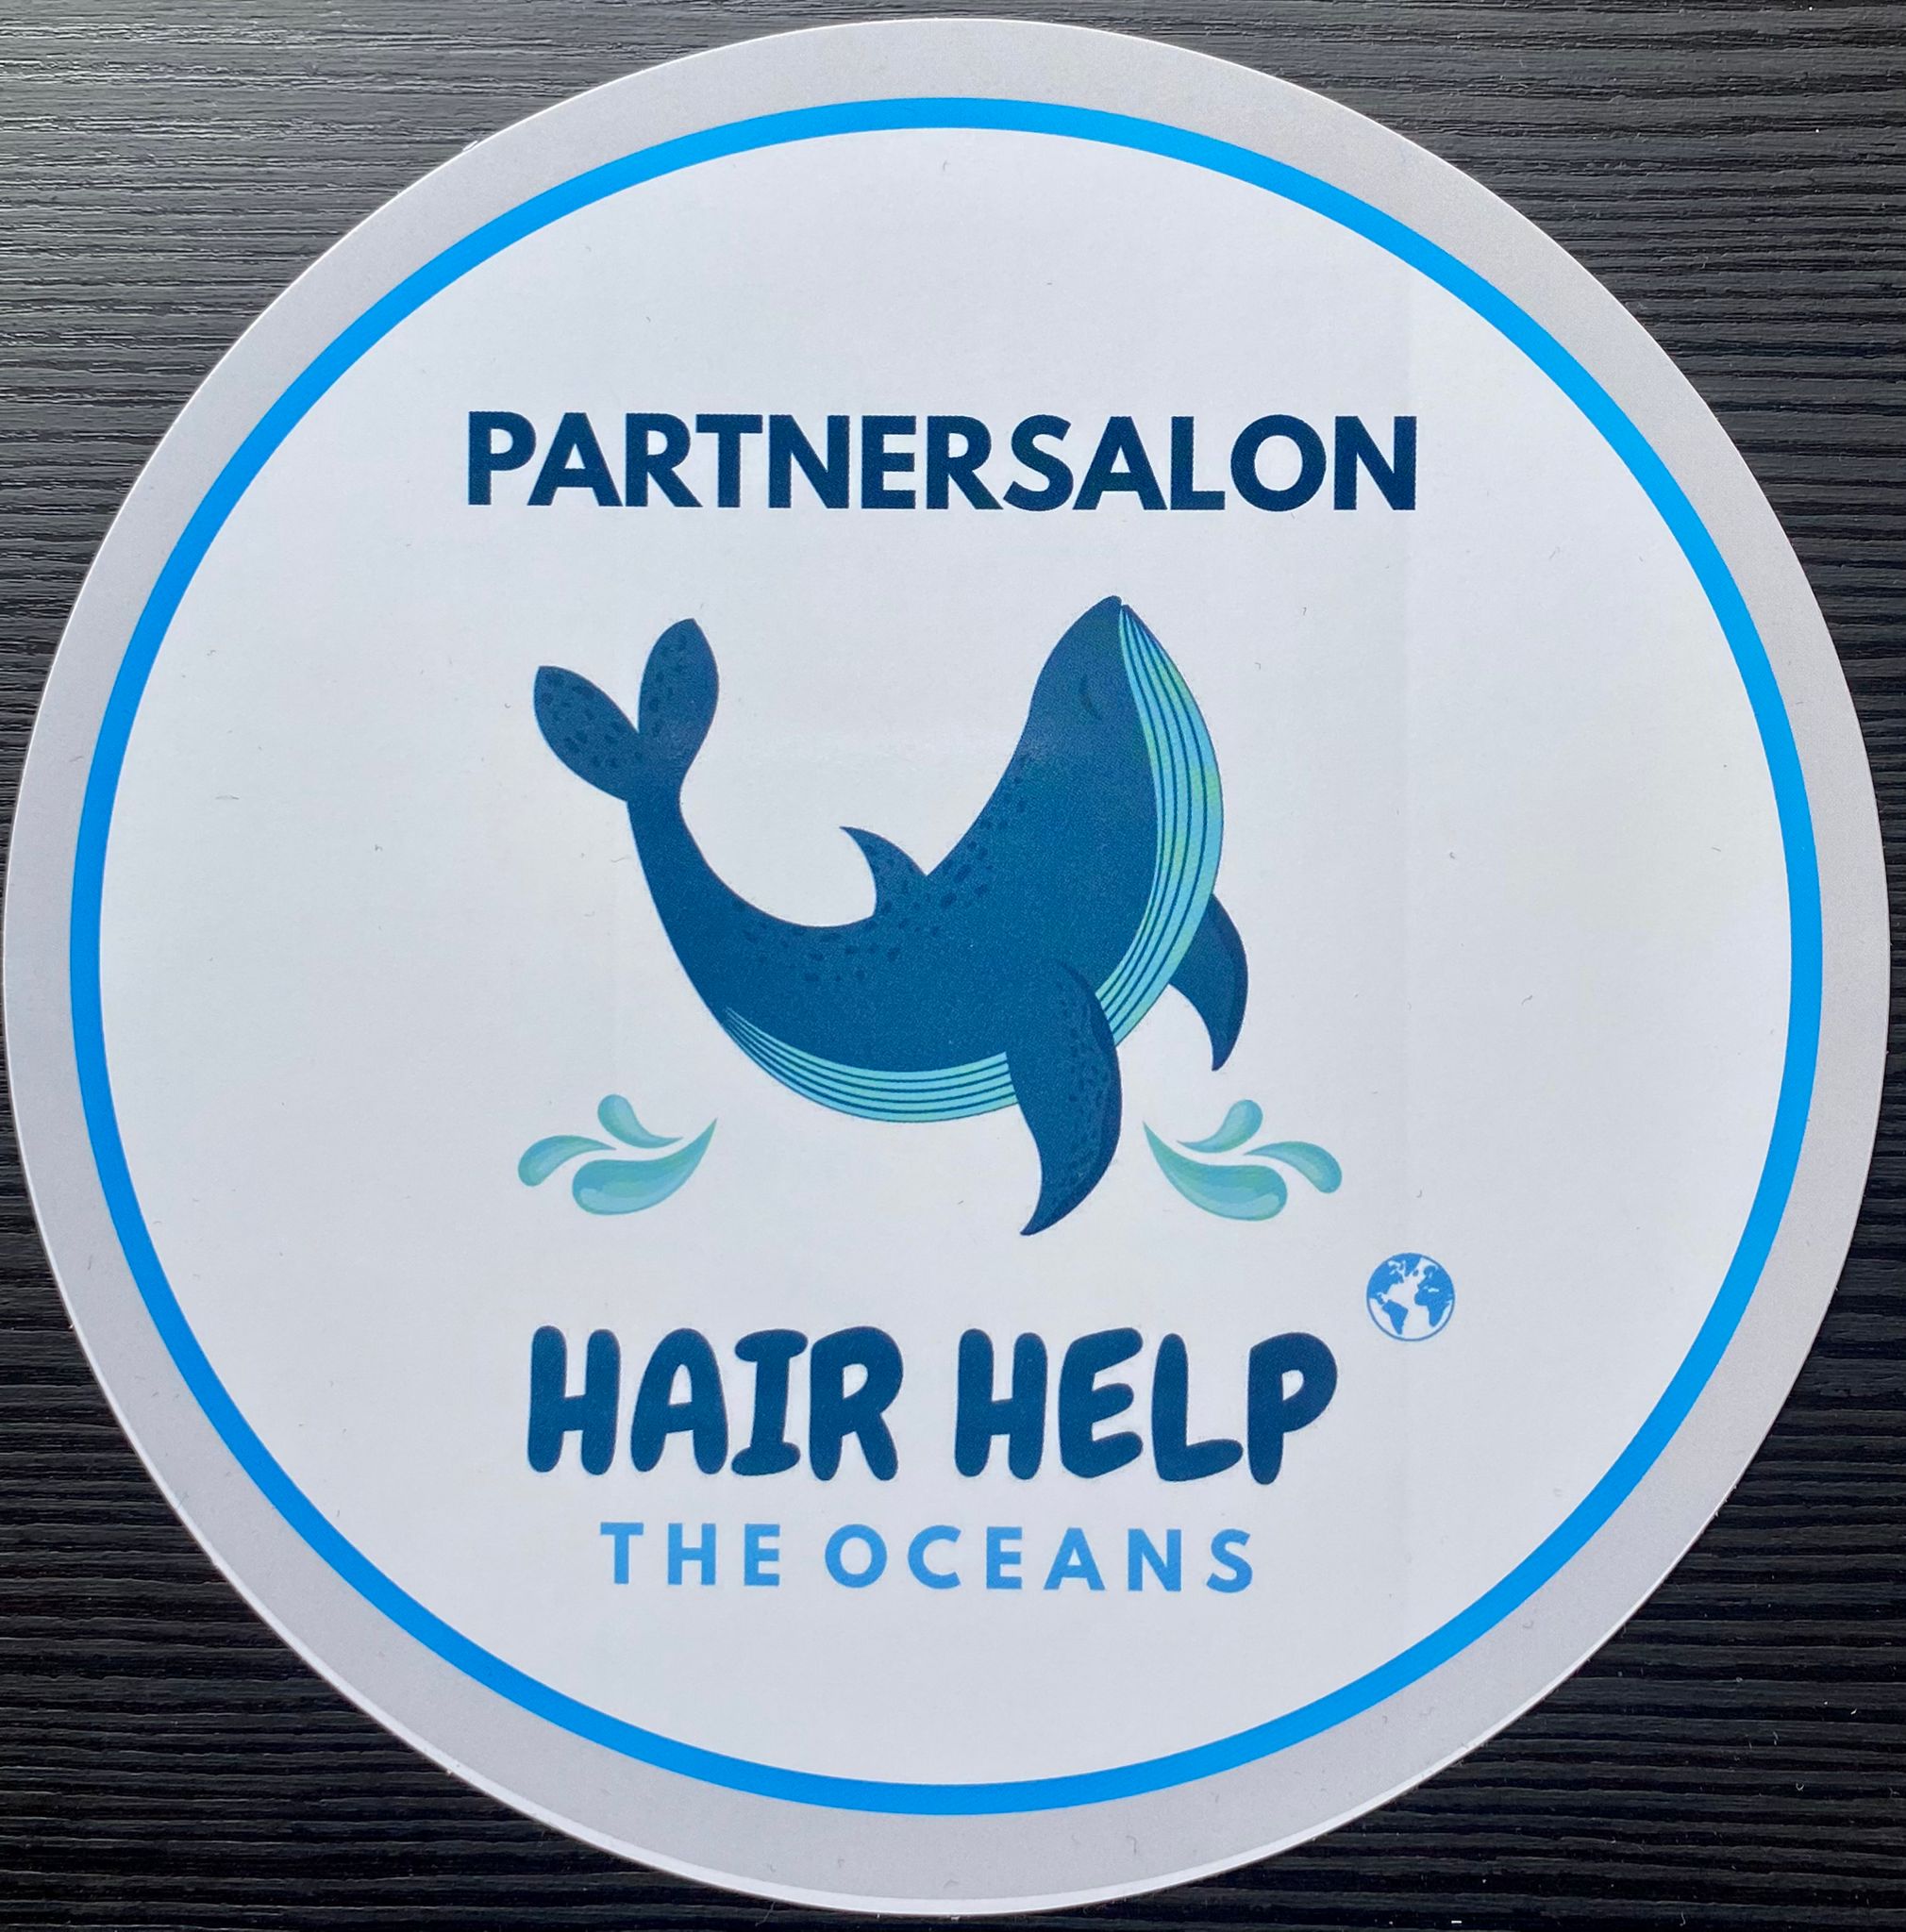 Partnersalon hair help - ocean